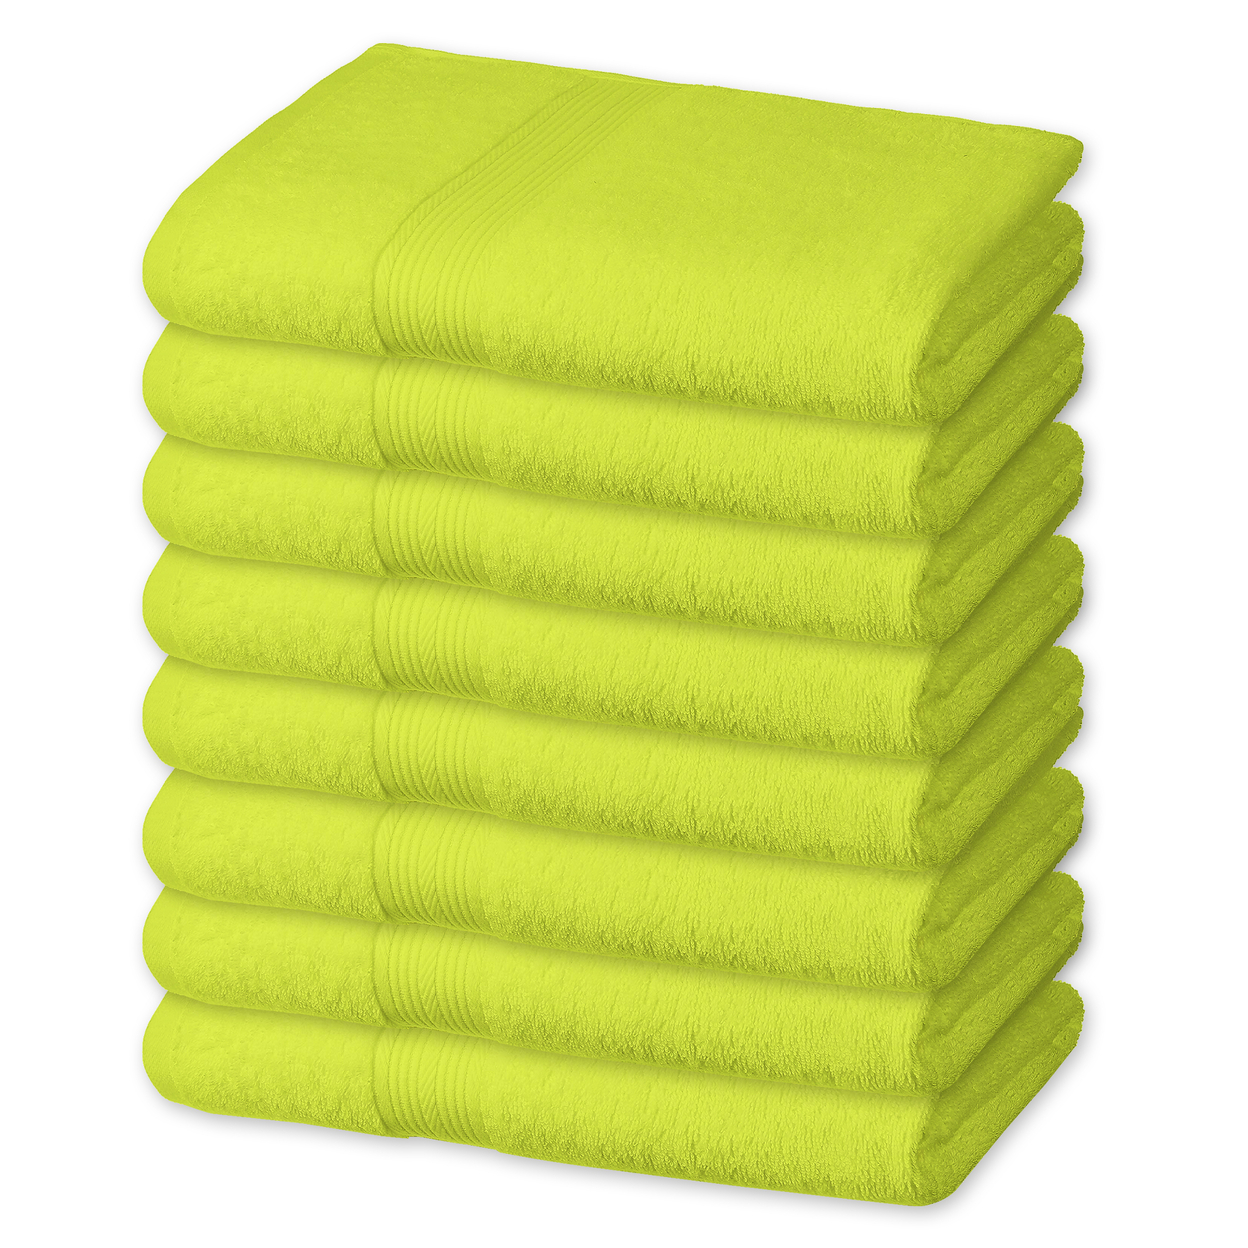 4-Pack: Super Absorbent 100% Cotton 54 X 27 Hotel Beach Bath Towels - Grey